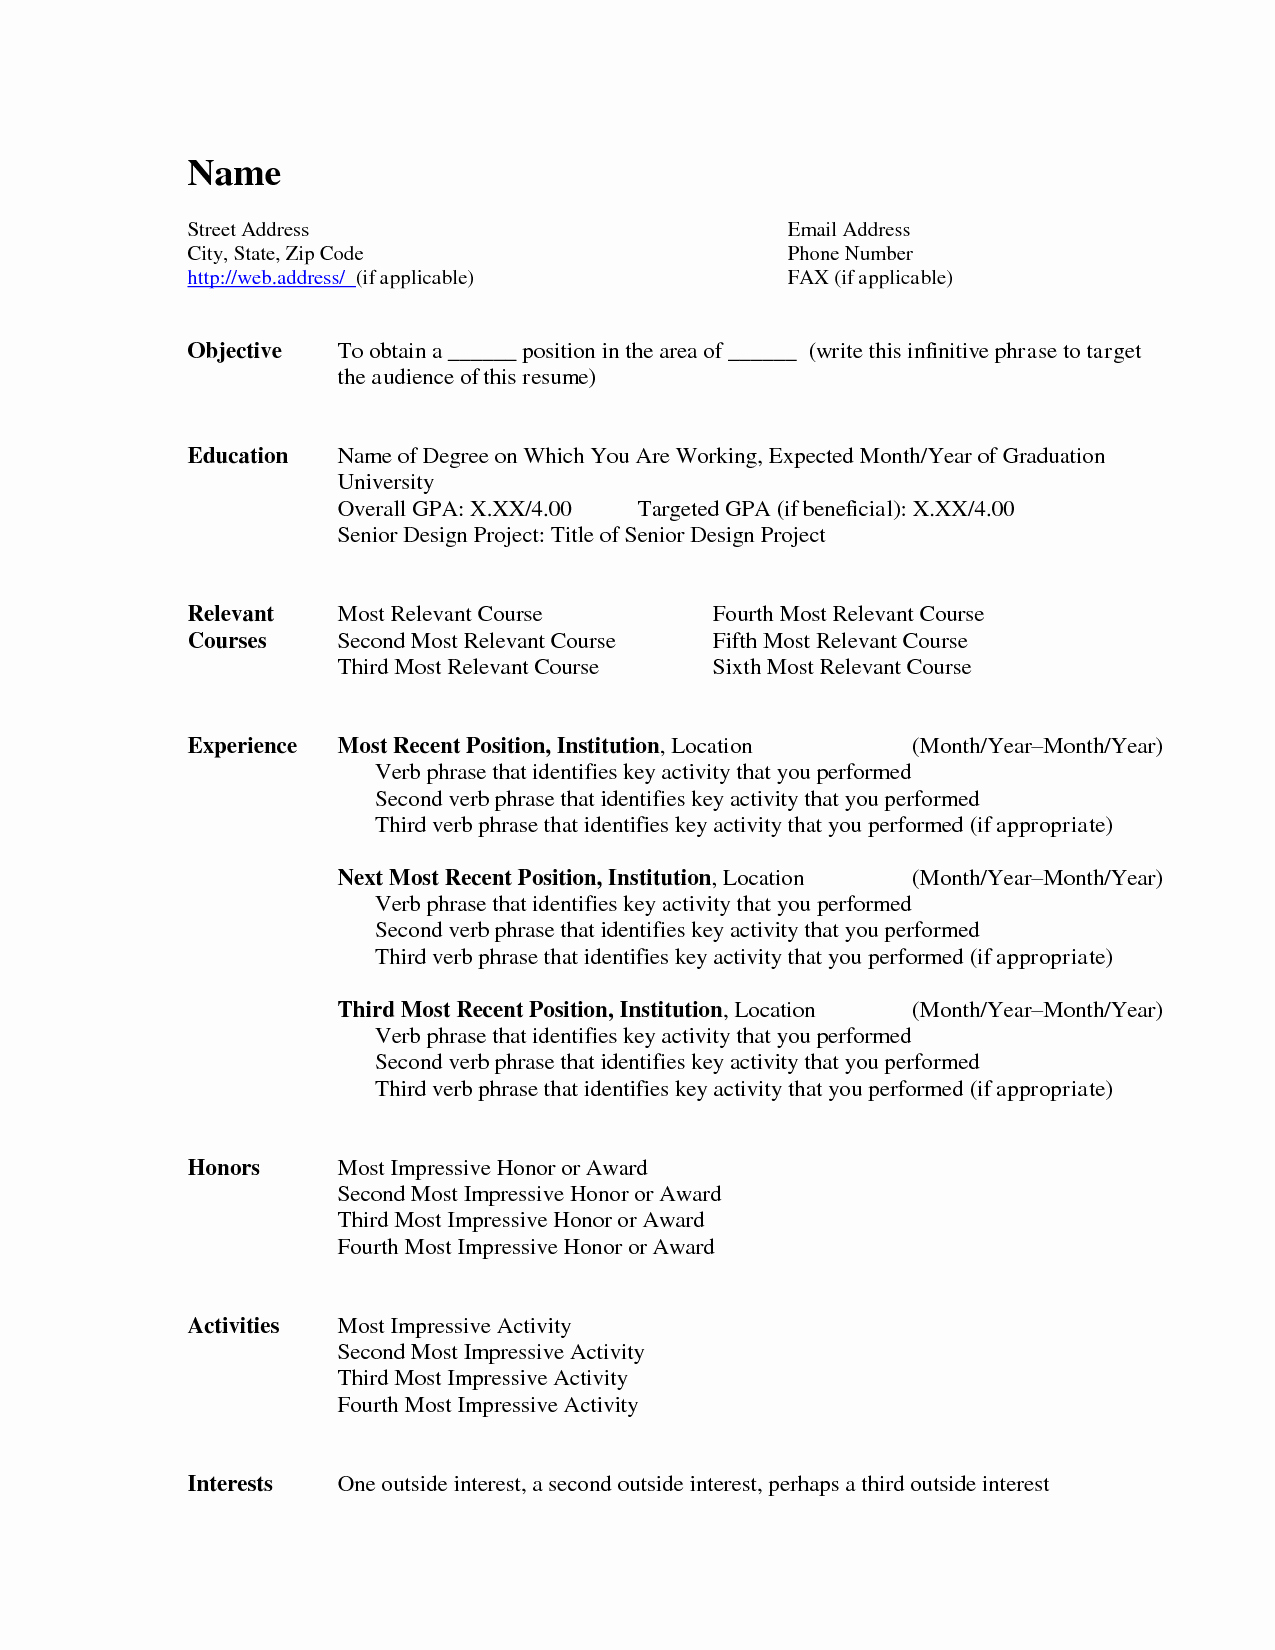 Microsoft Word Resume Template Resume Builder Resume